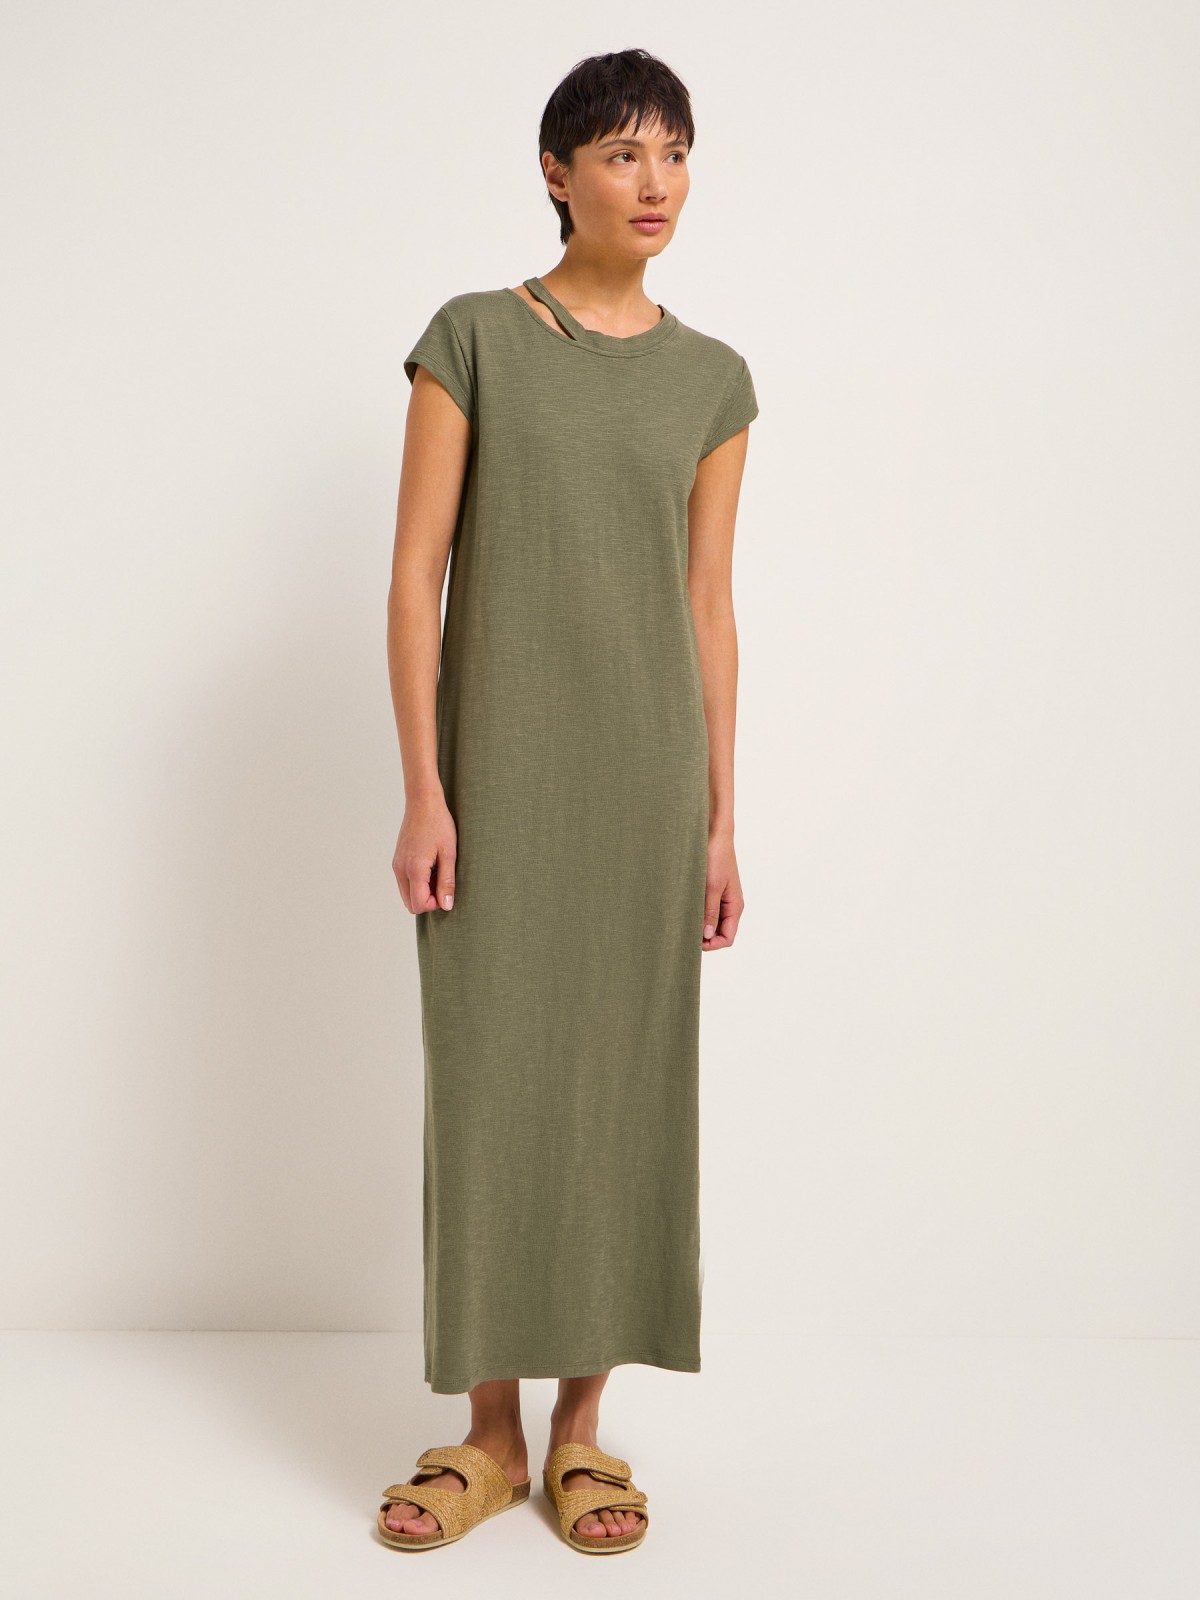 Dress made of organic cotton - tea leaf